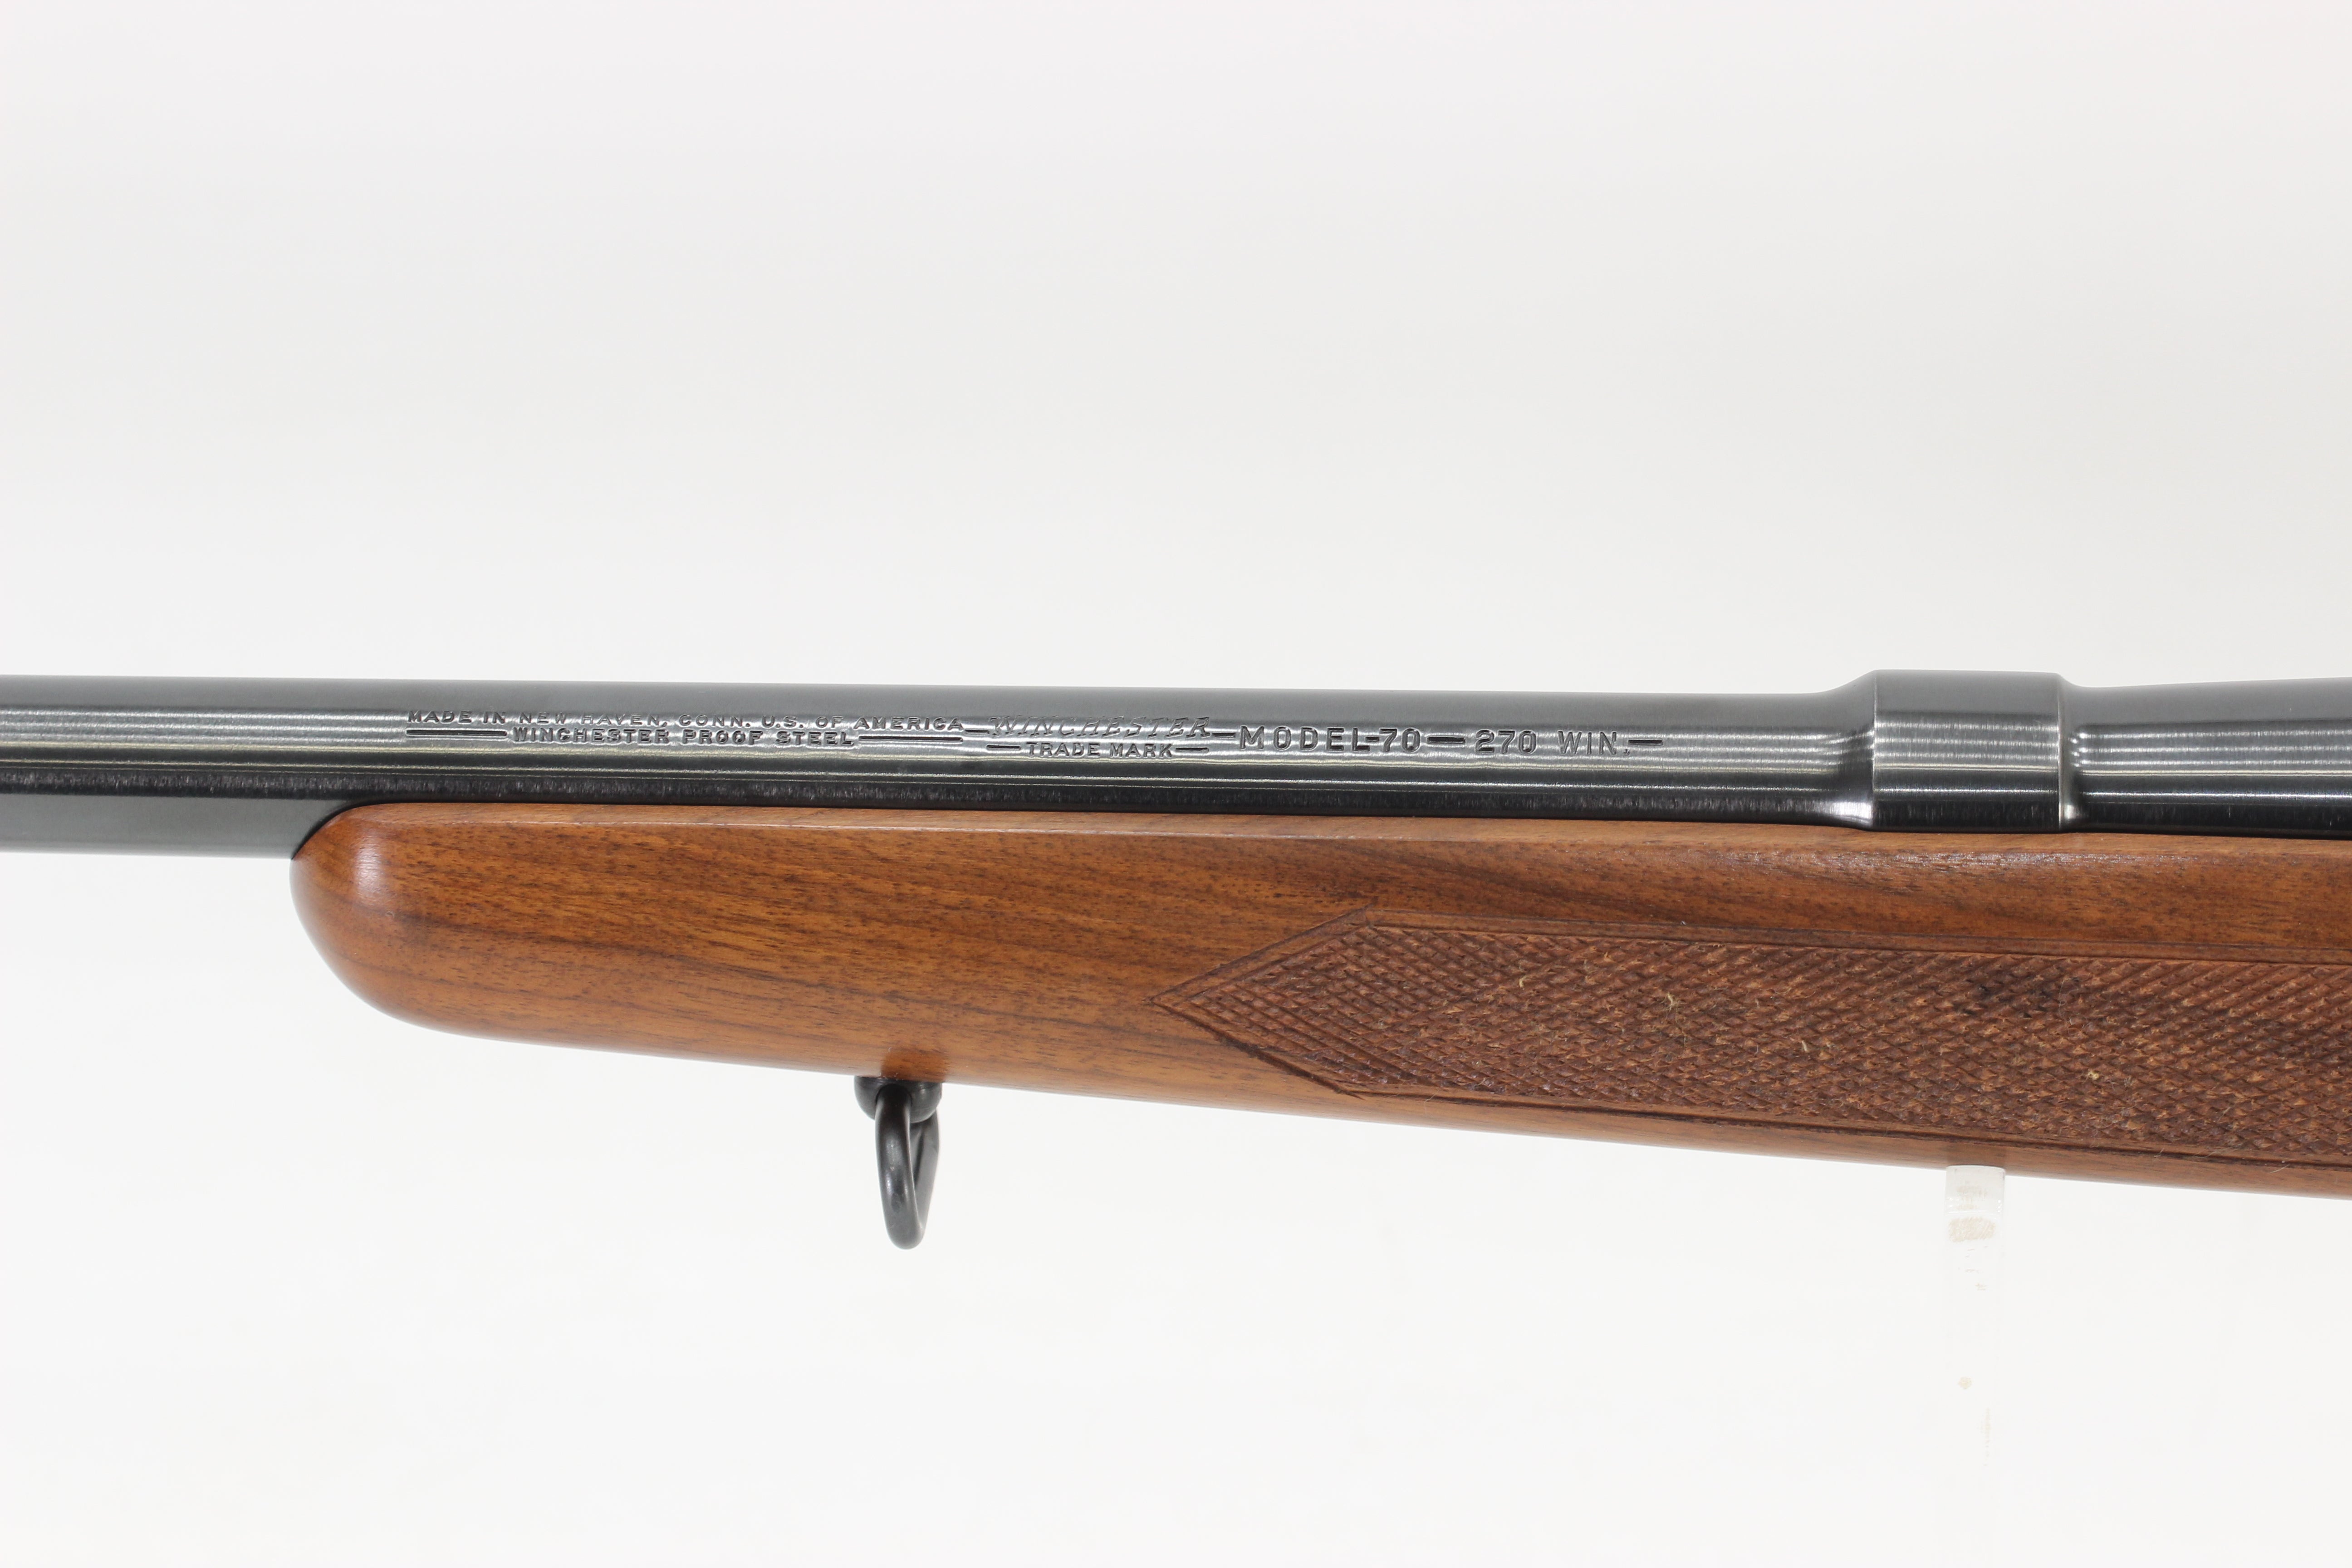 .270 Win. Sightless Rifle - 1961